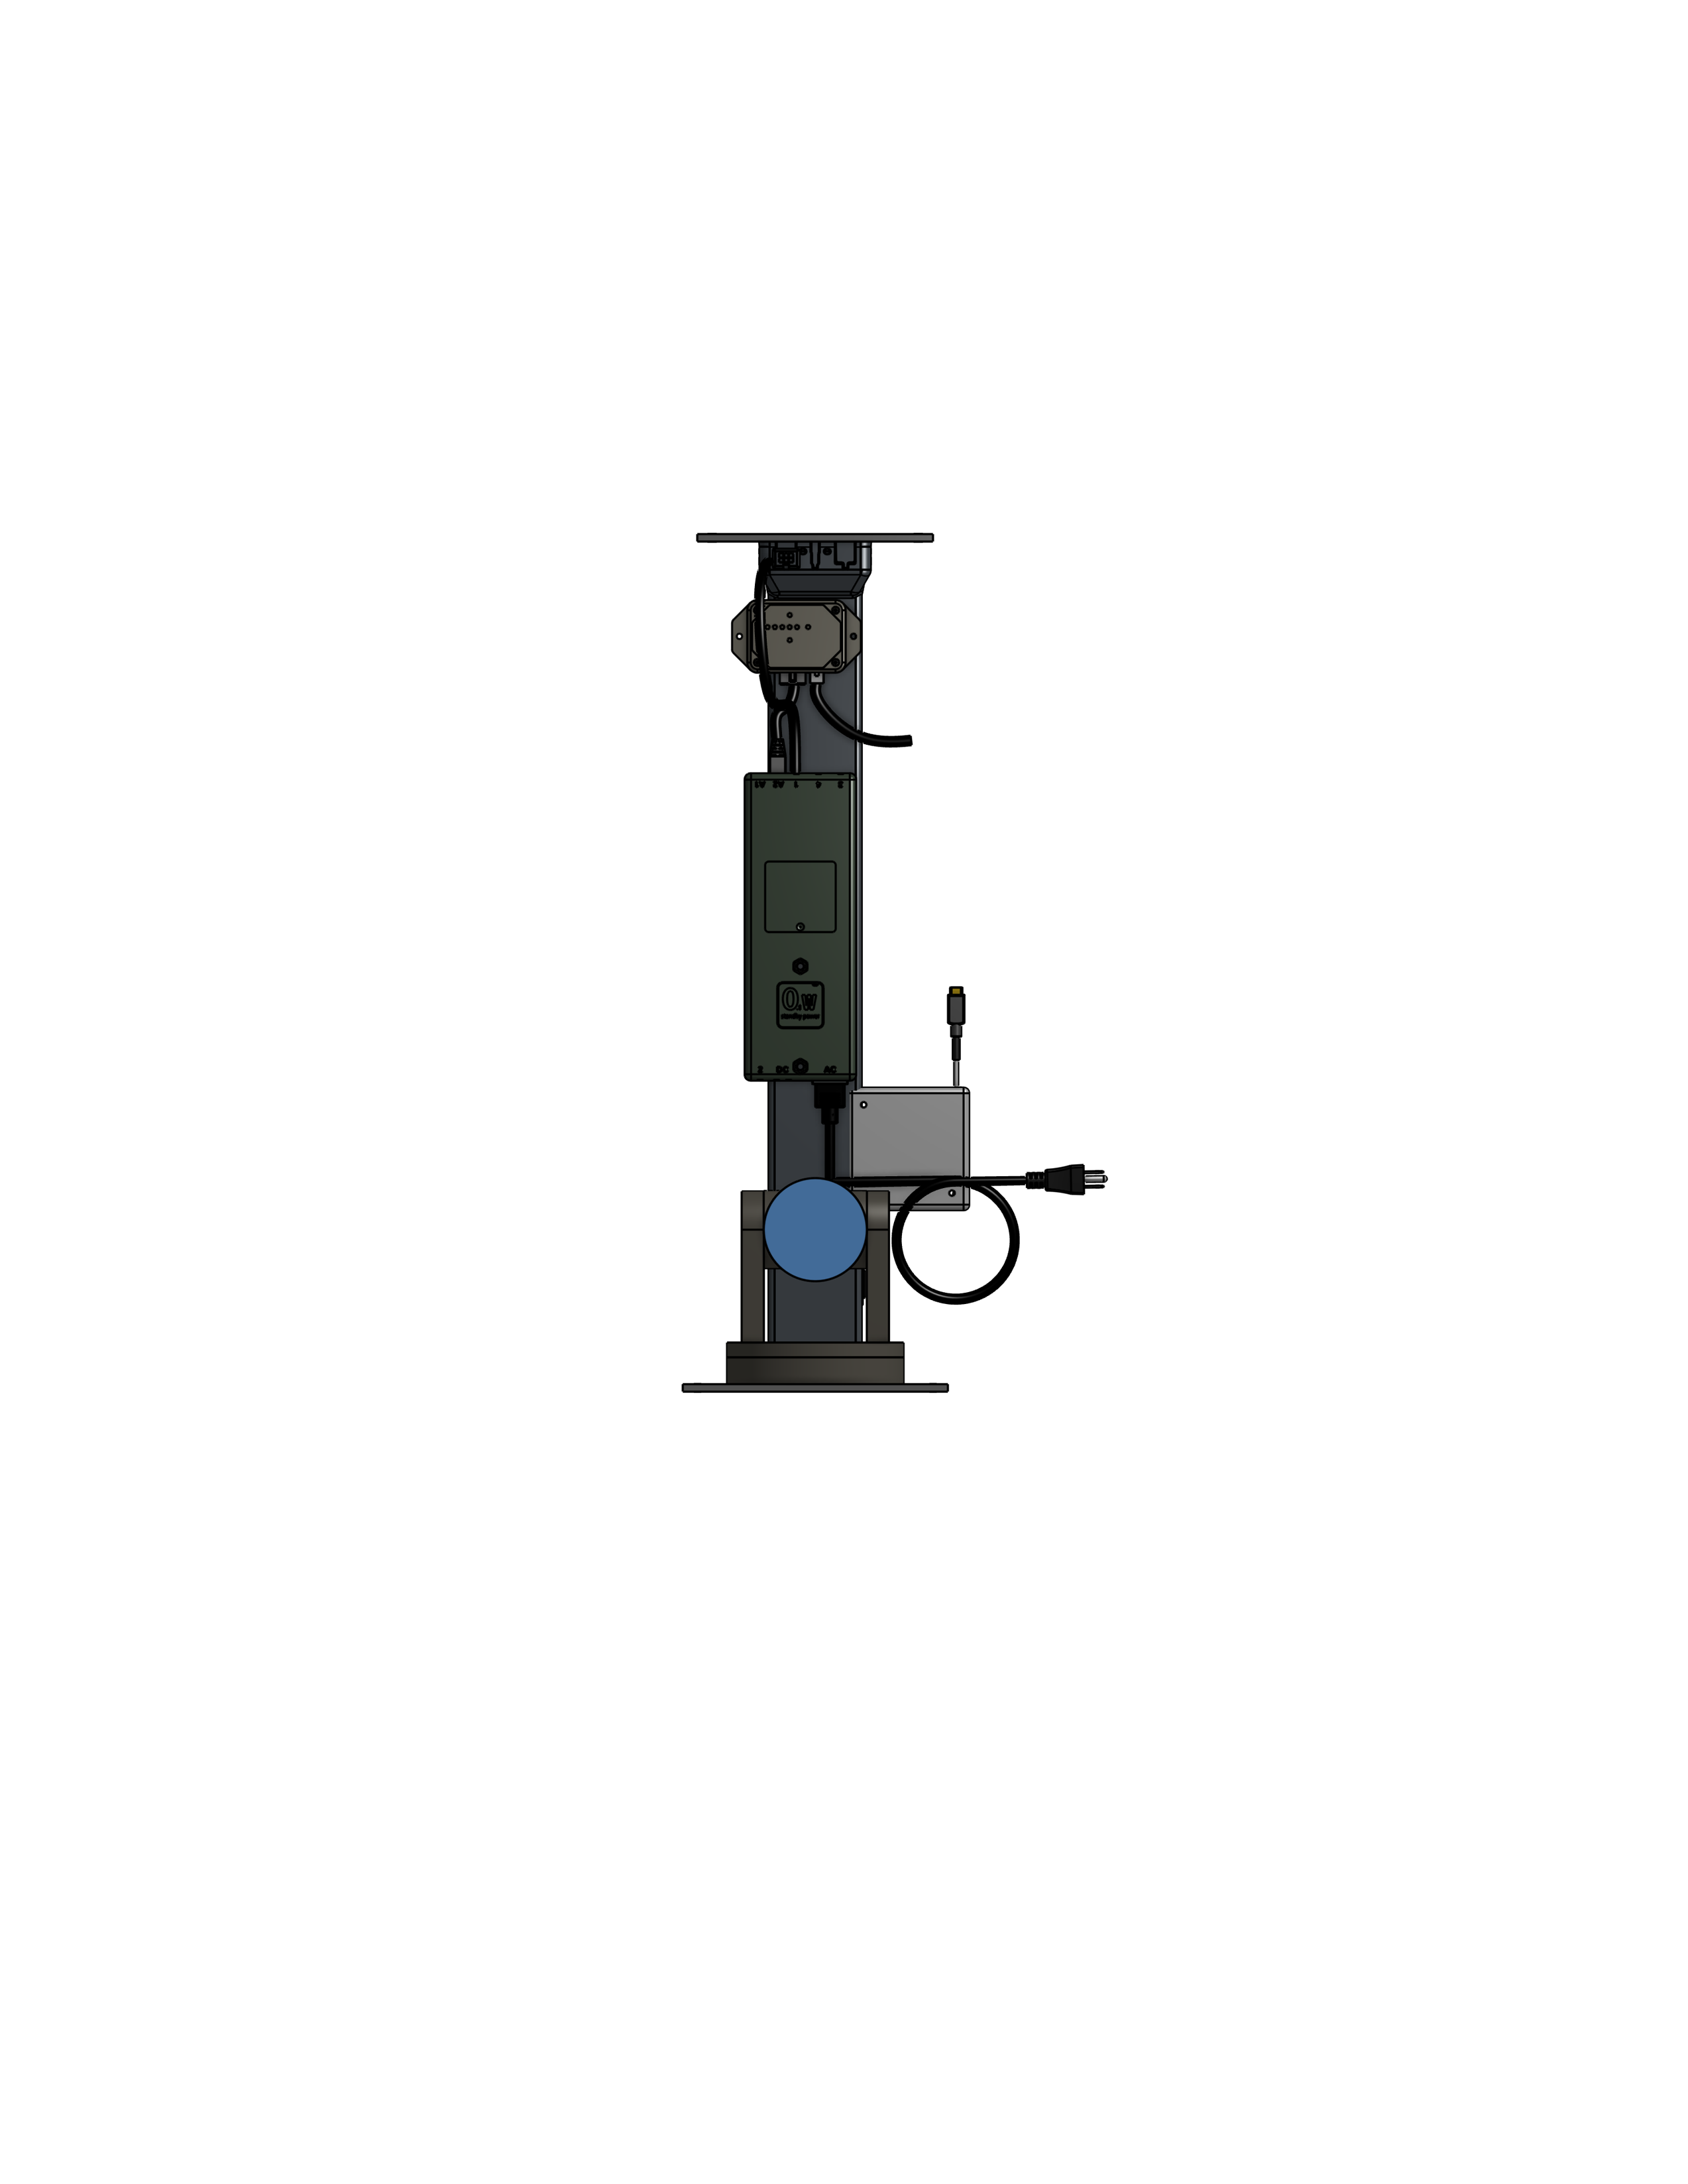 PTZ Camera Lift - Ceiling Mounted - Travel: 38 Inches - Model APTZ-30-38